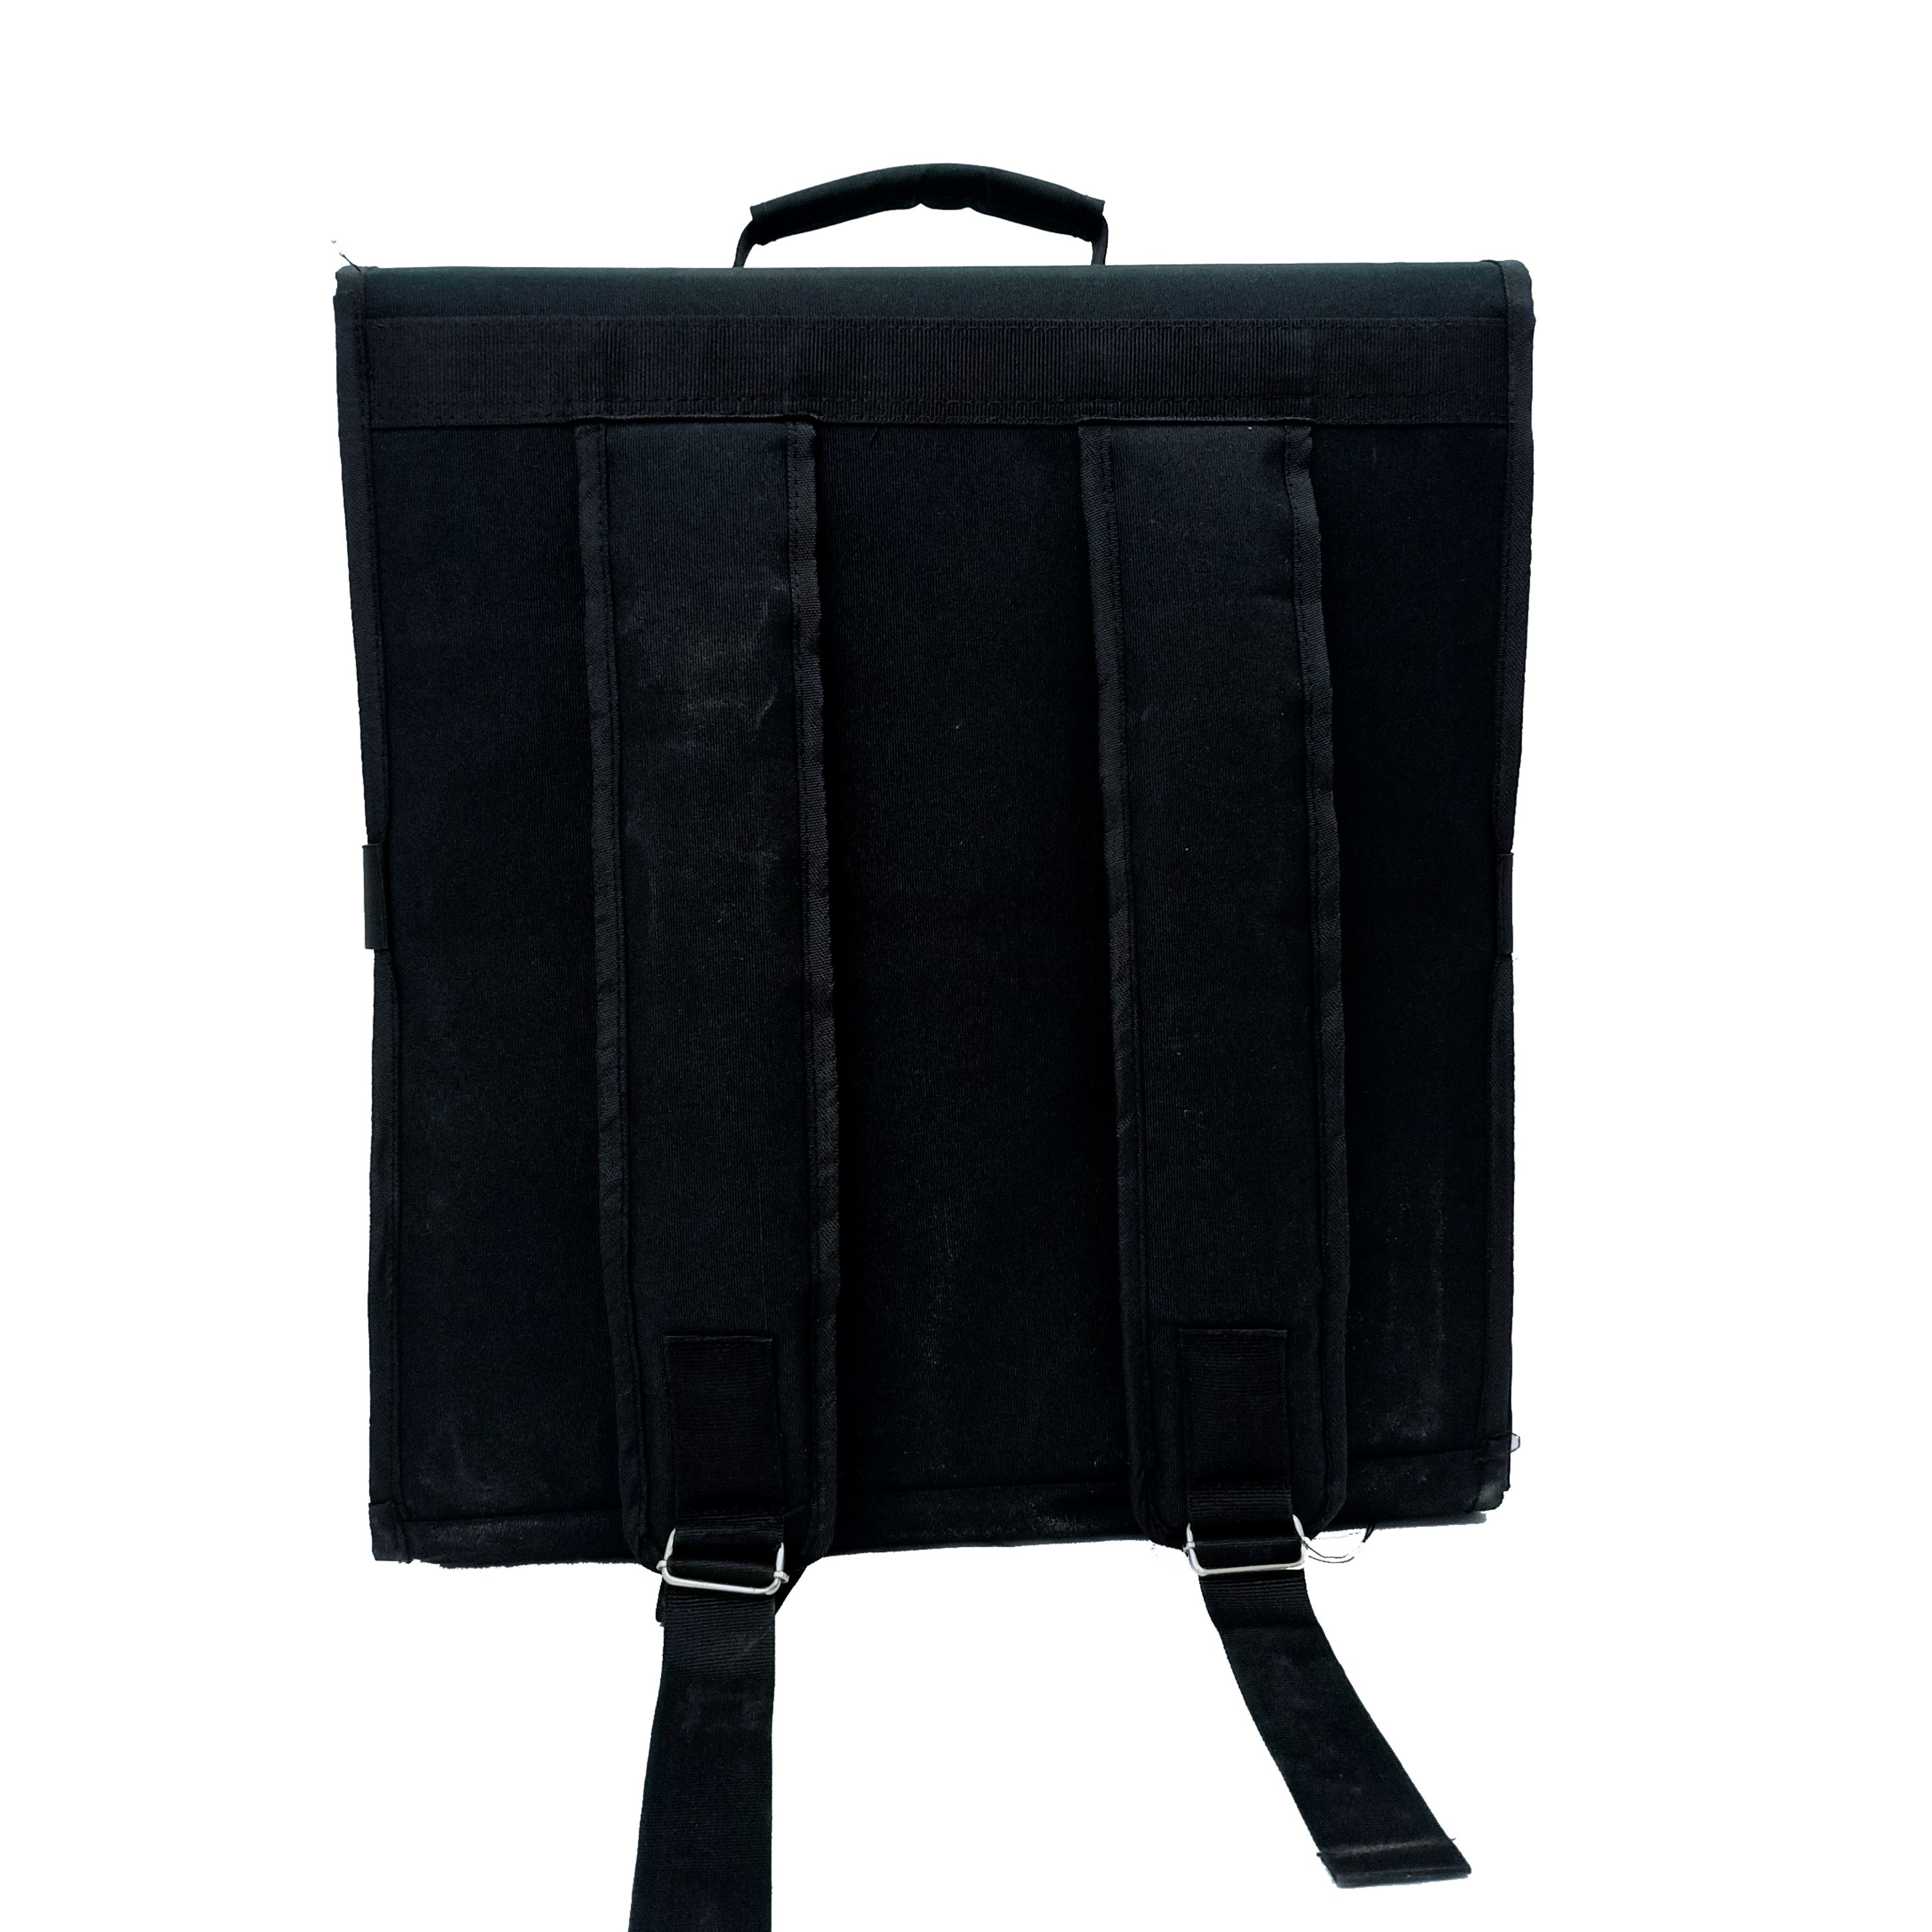 Optical Trolley Bag | Optical Tray Bag | The Monarch Enterprises